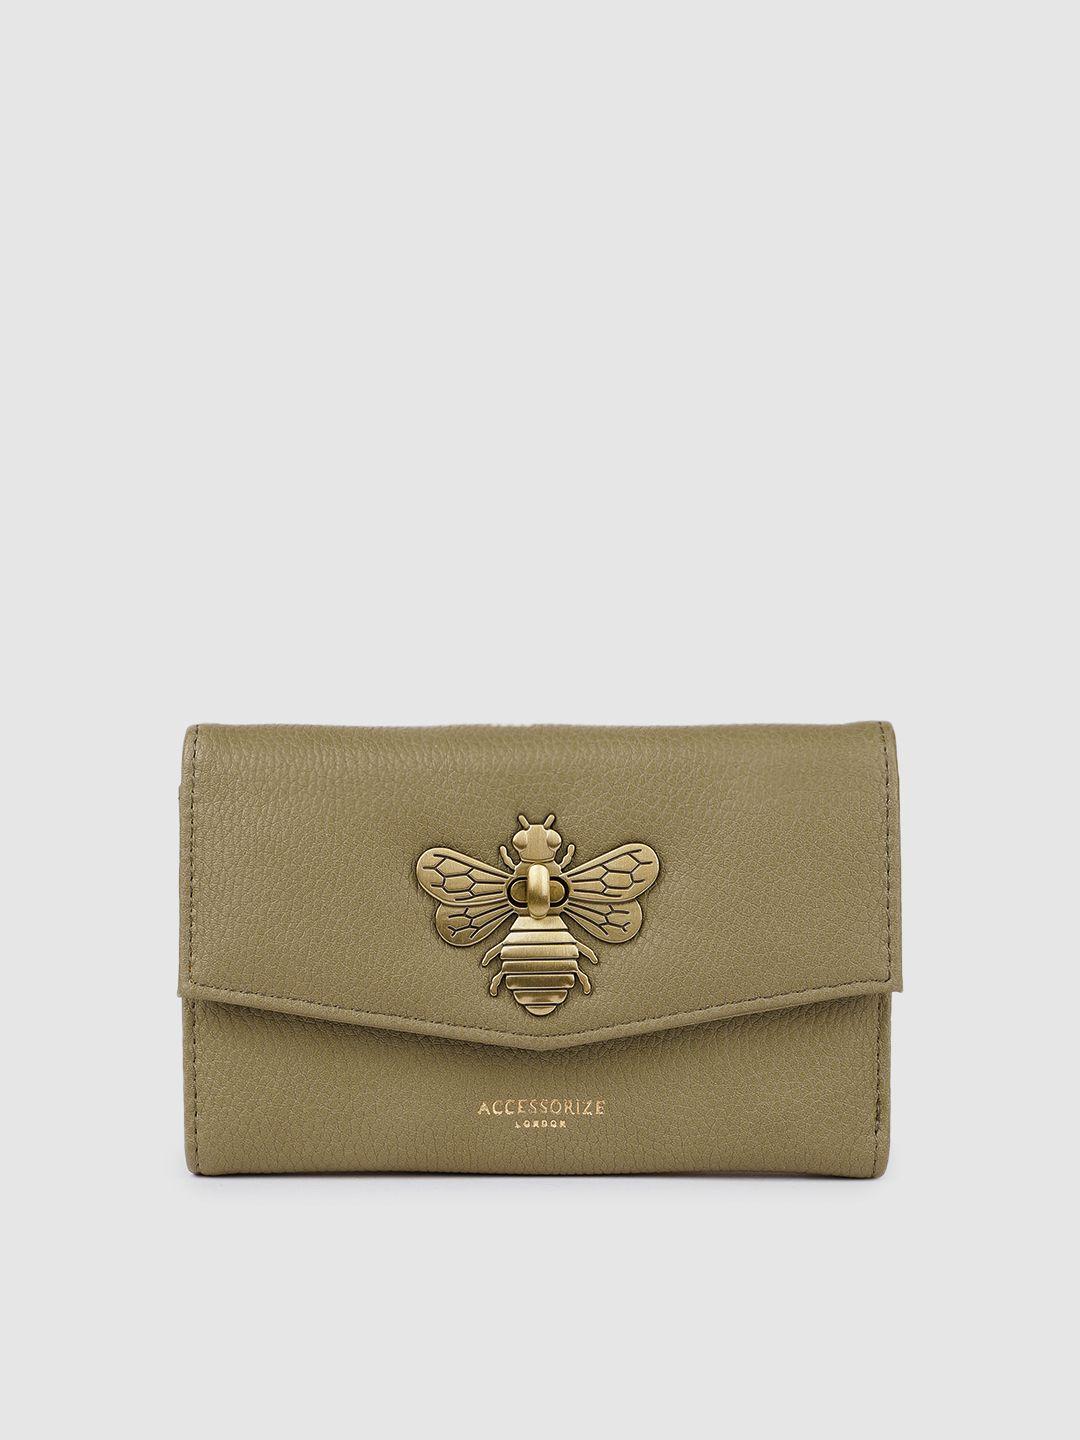 accessorize women khaki envelope wallet